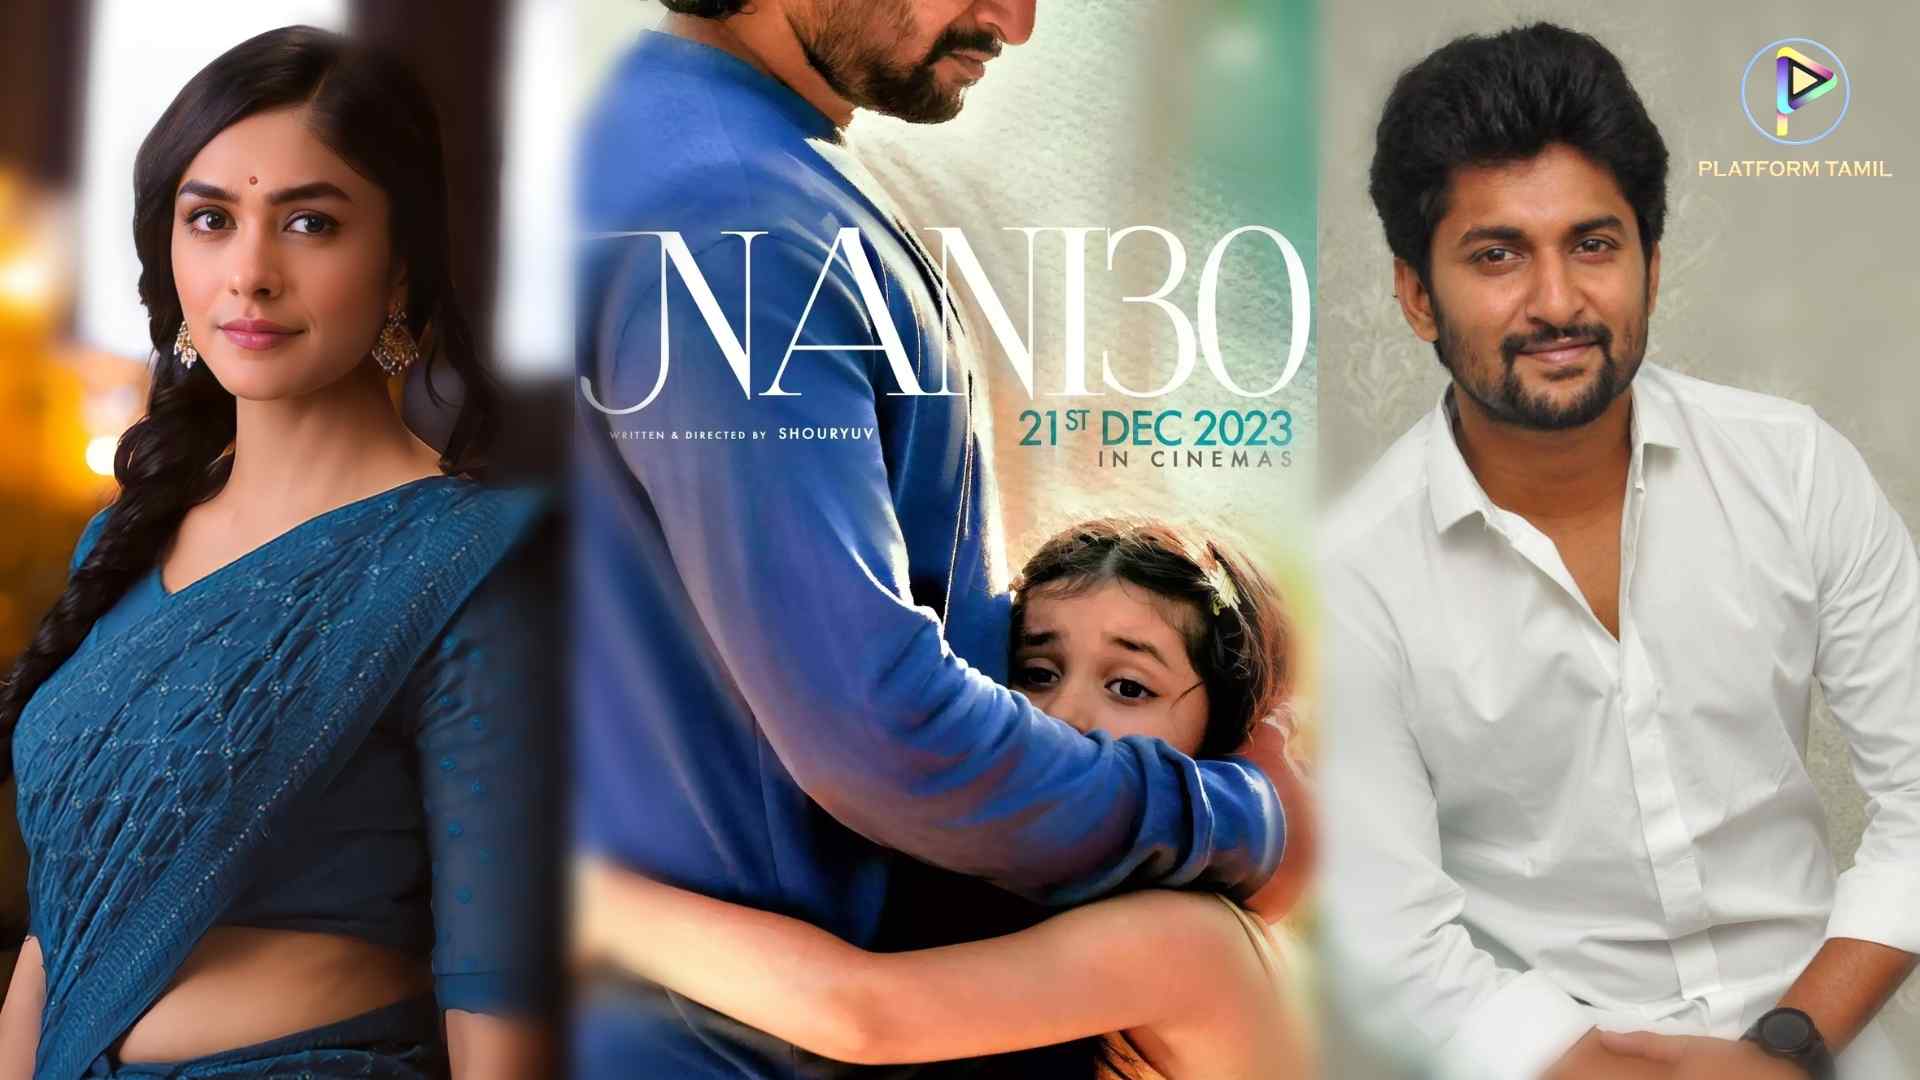 Nani 30 Release Date - Platform Tamil